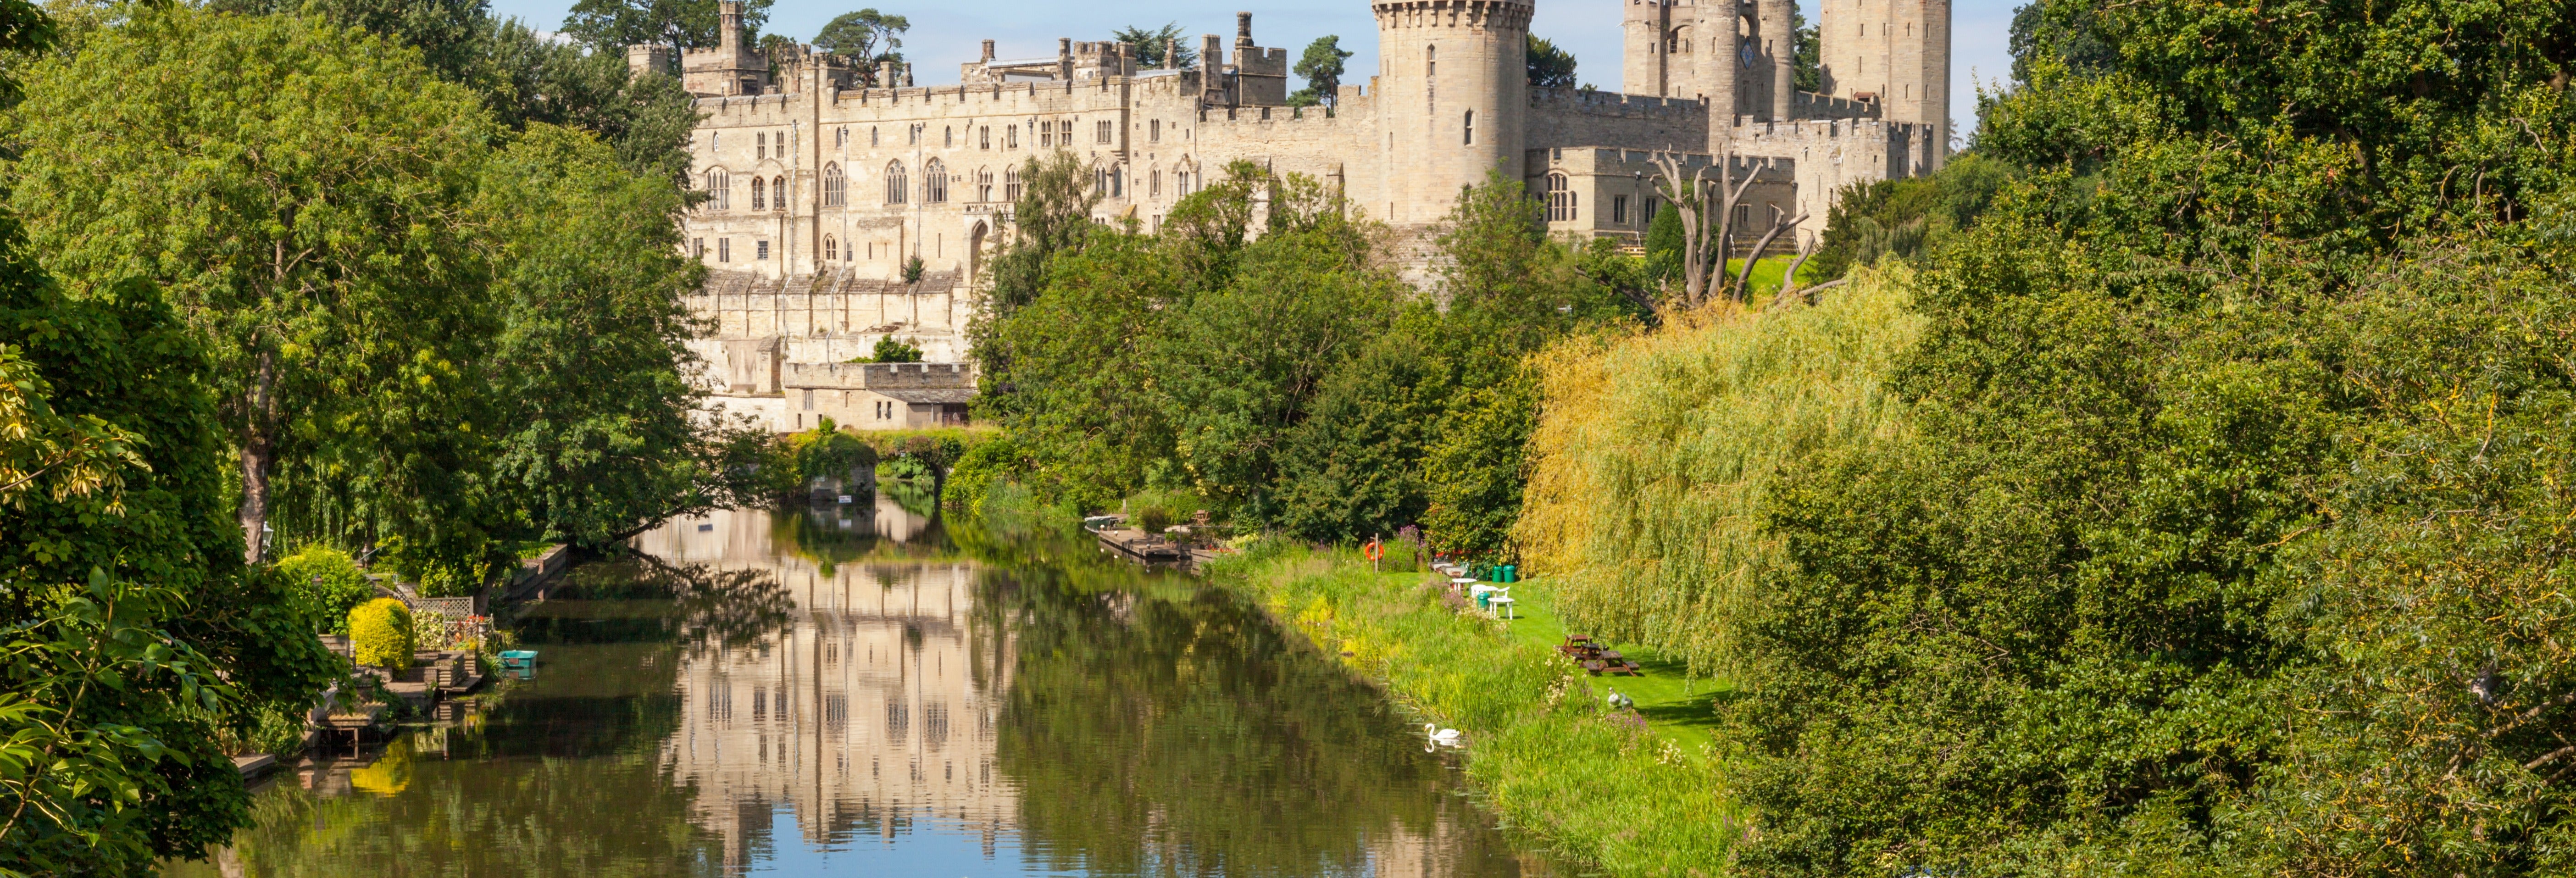 Castelo de Warwick, Stratford-upon-Avon, Costwolds e Oxford